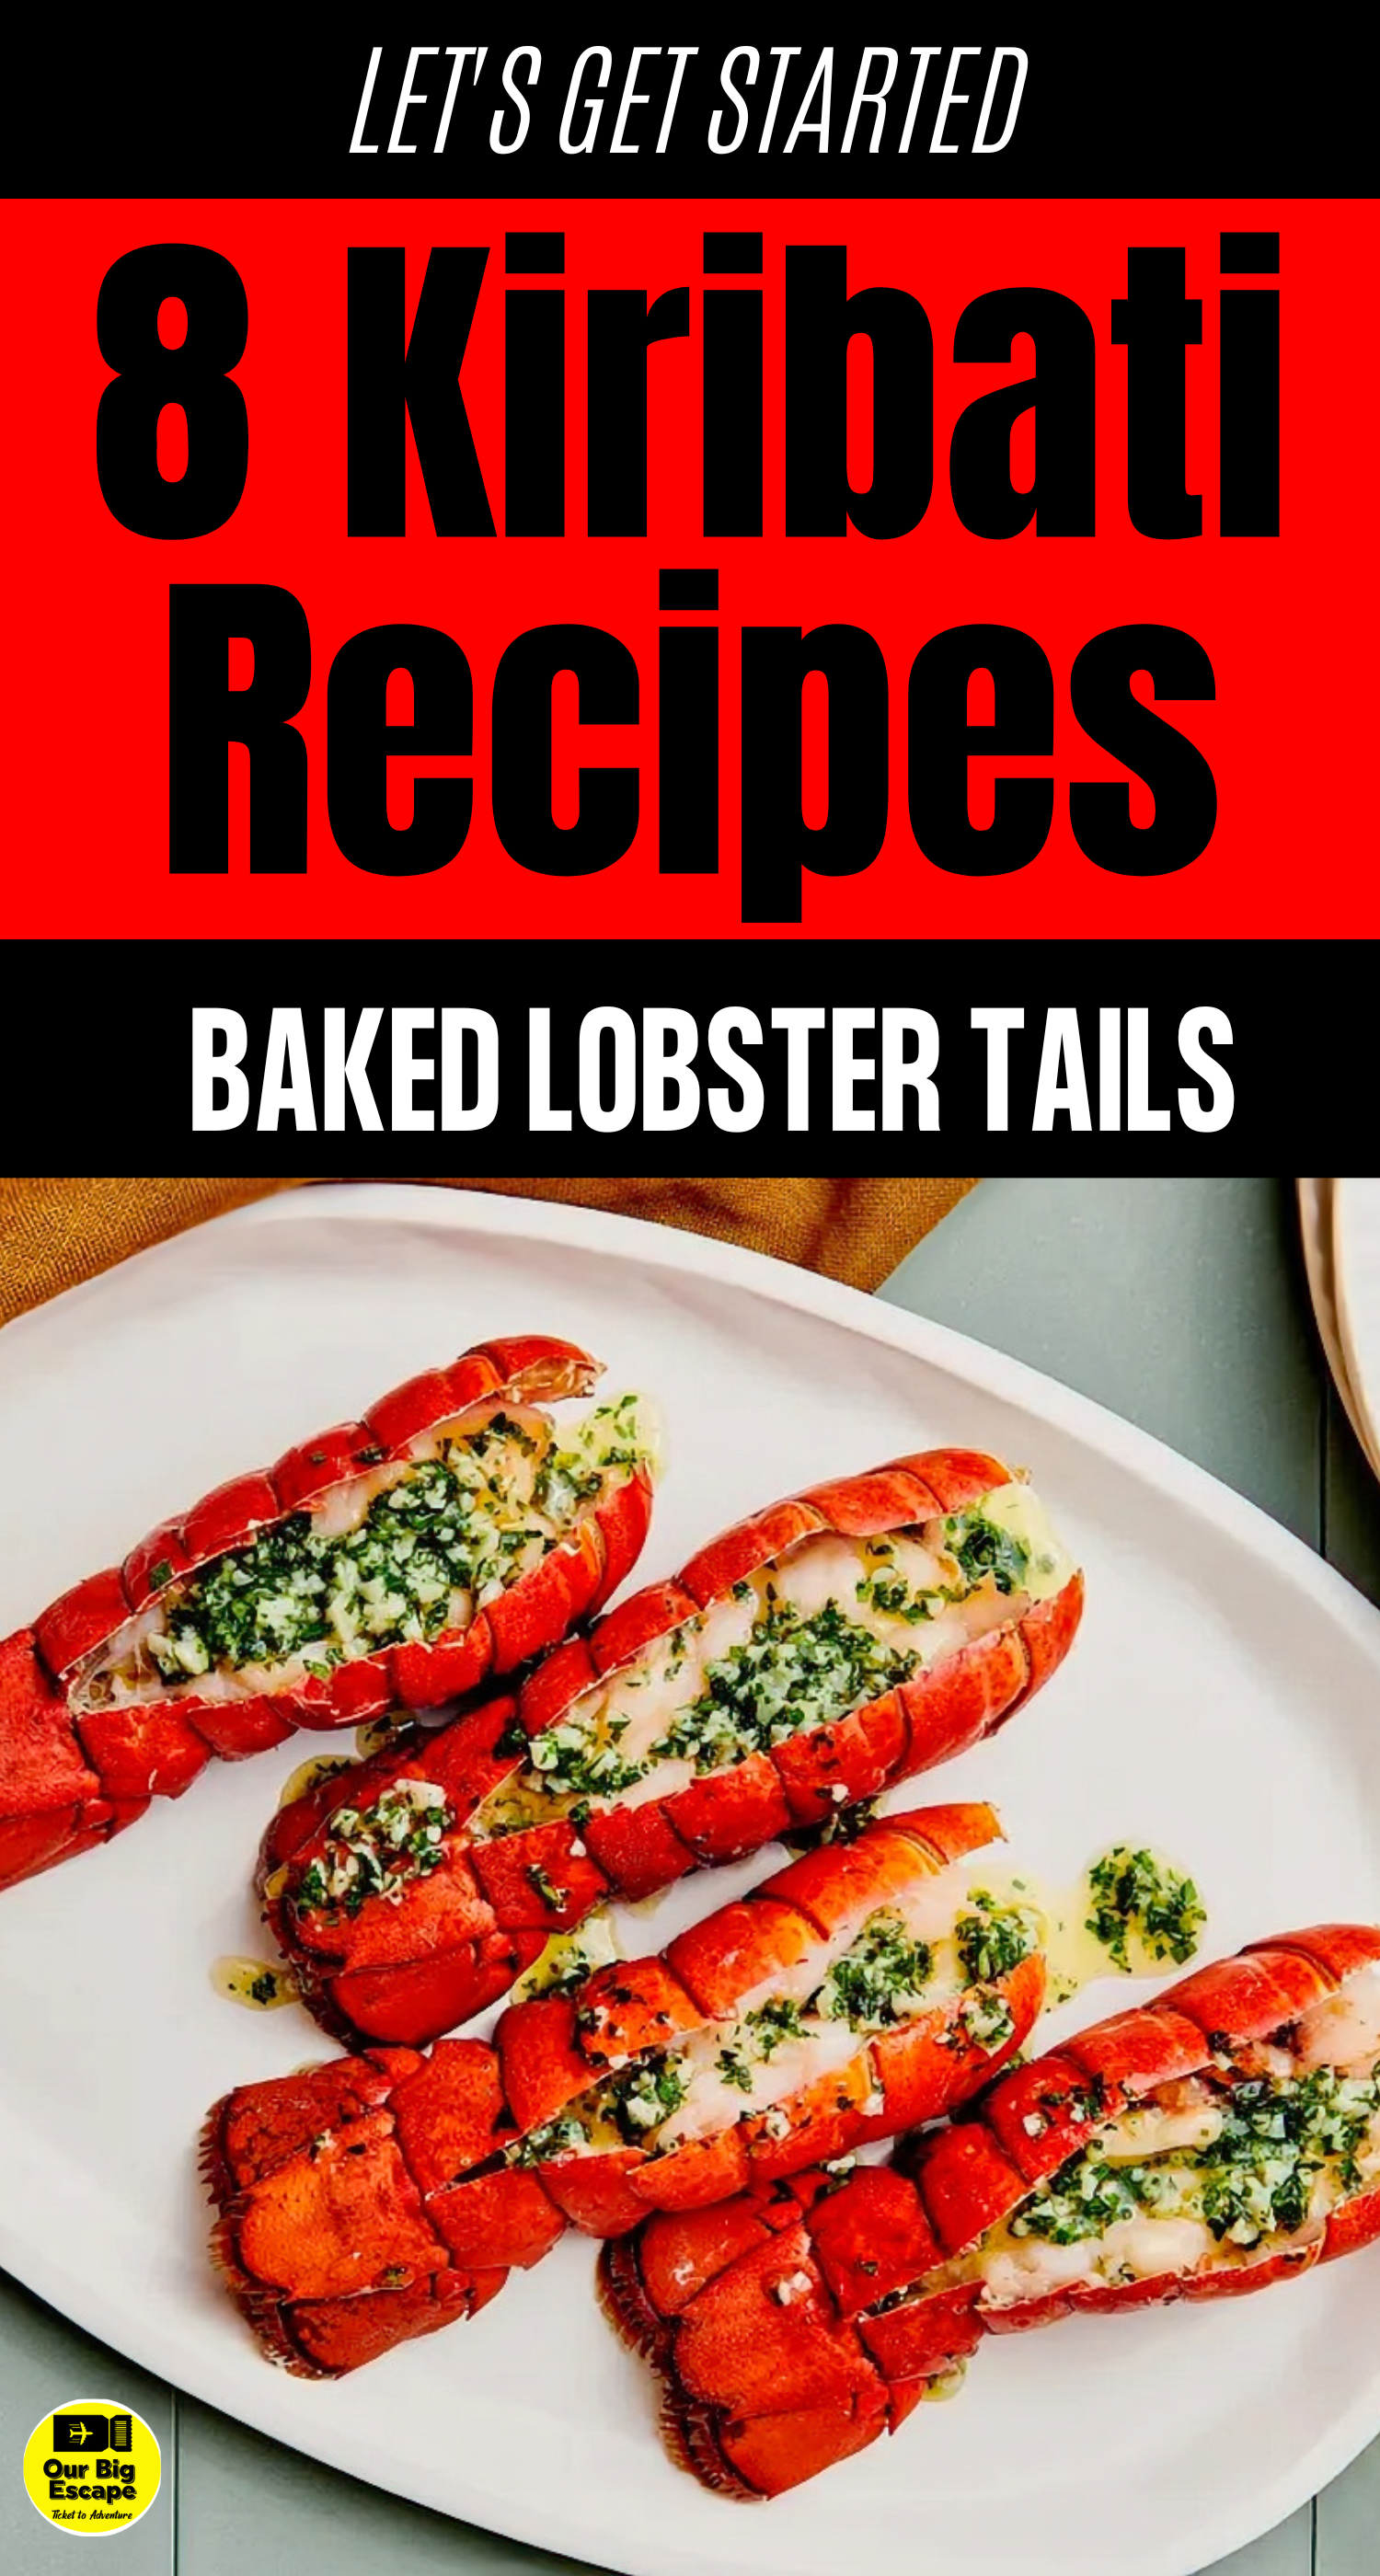 8 Kiribati Recipes - Baked Lobster Tails